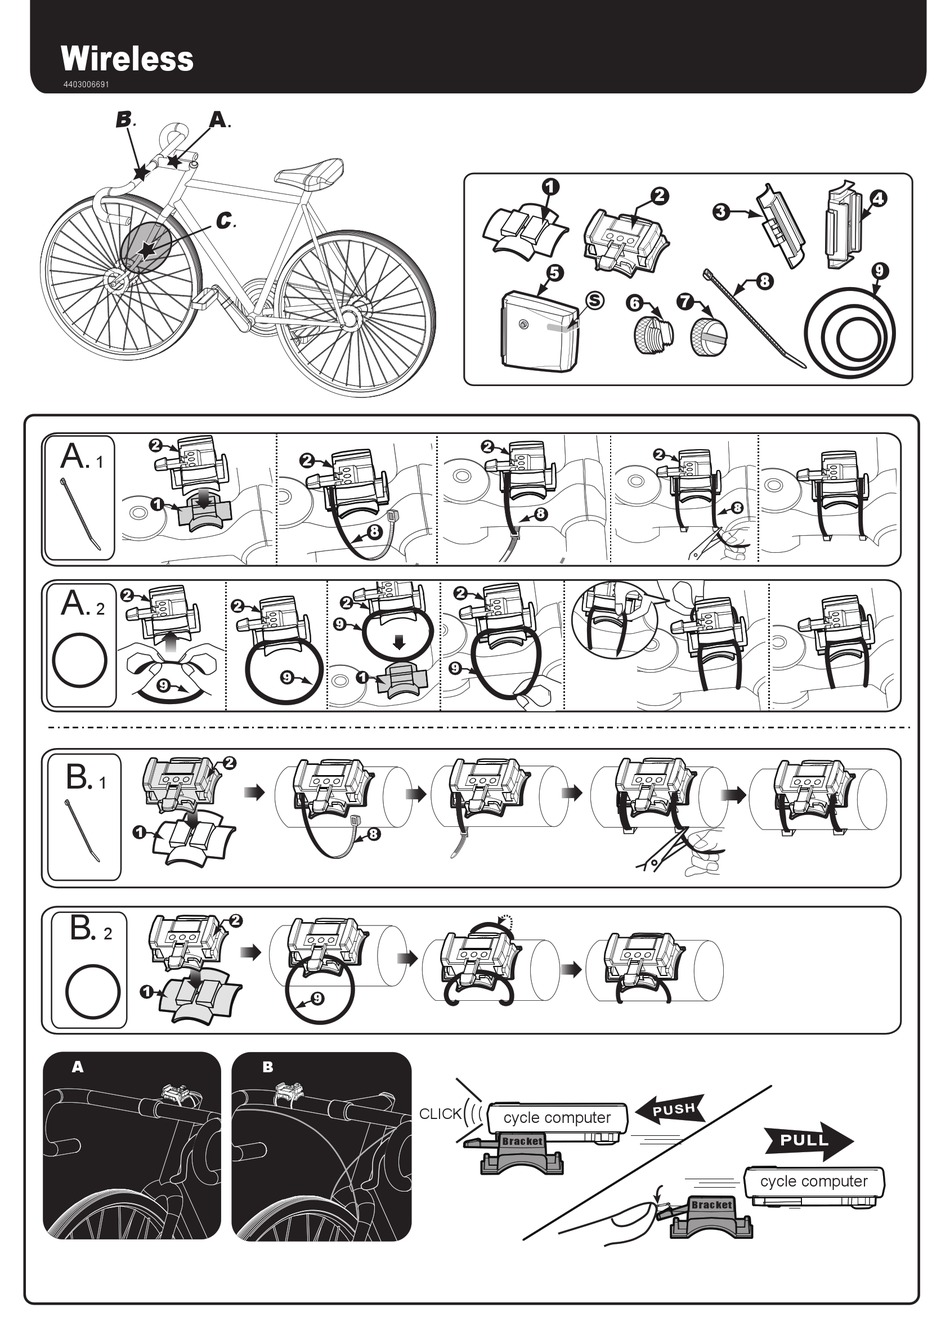 union 9wn cycle computer manual